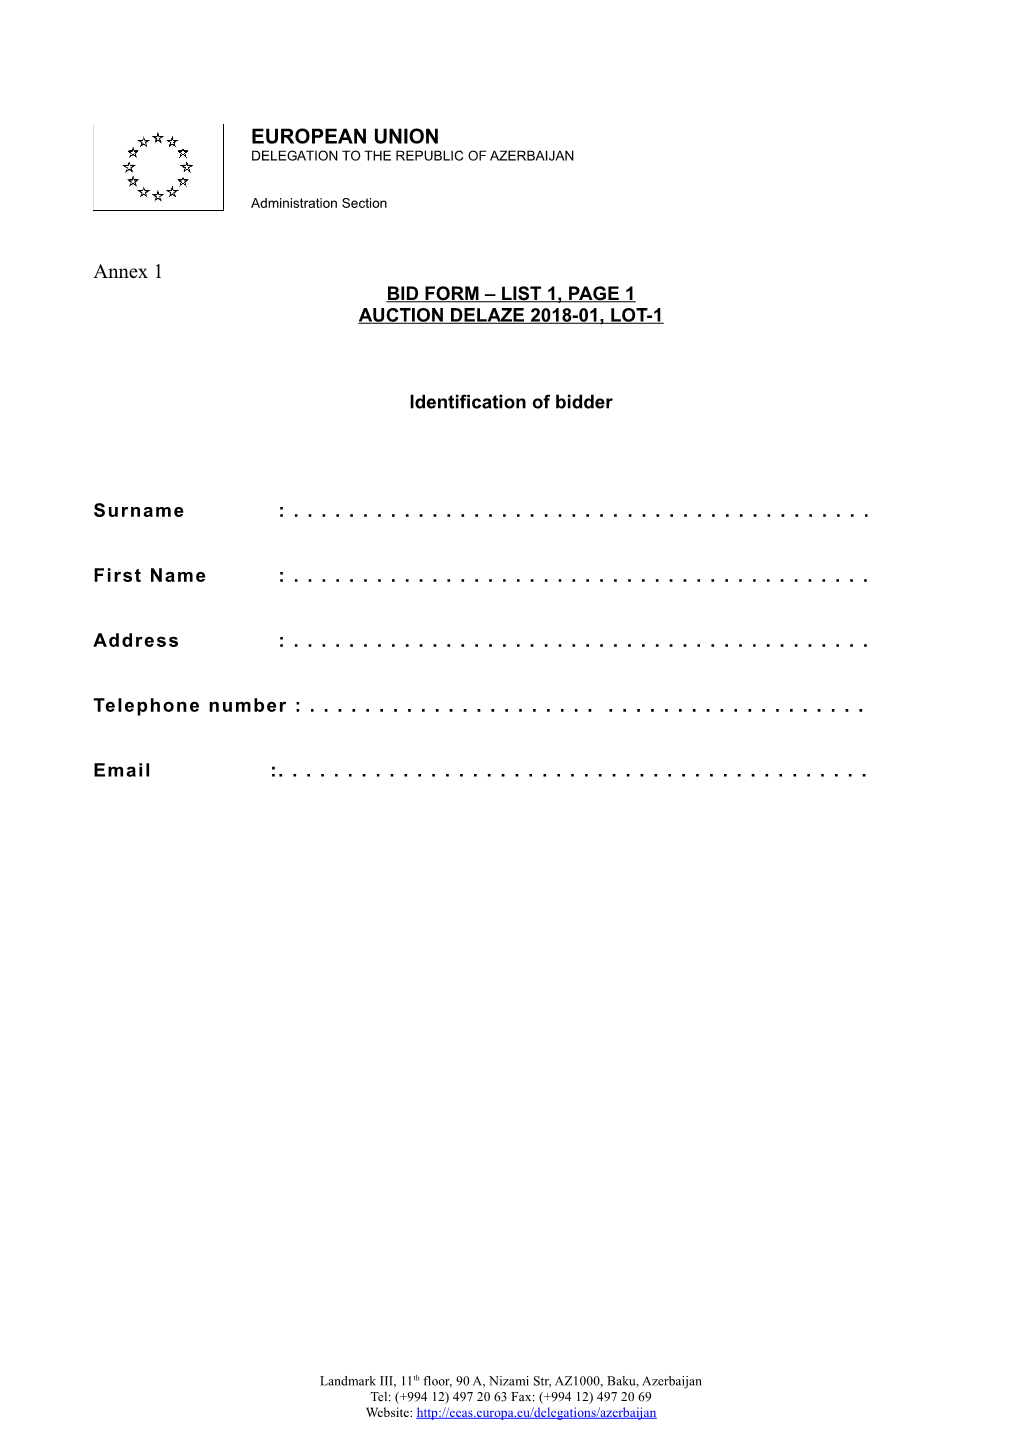 Bid Form List 1, Page 1